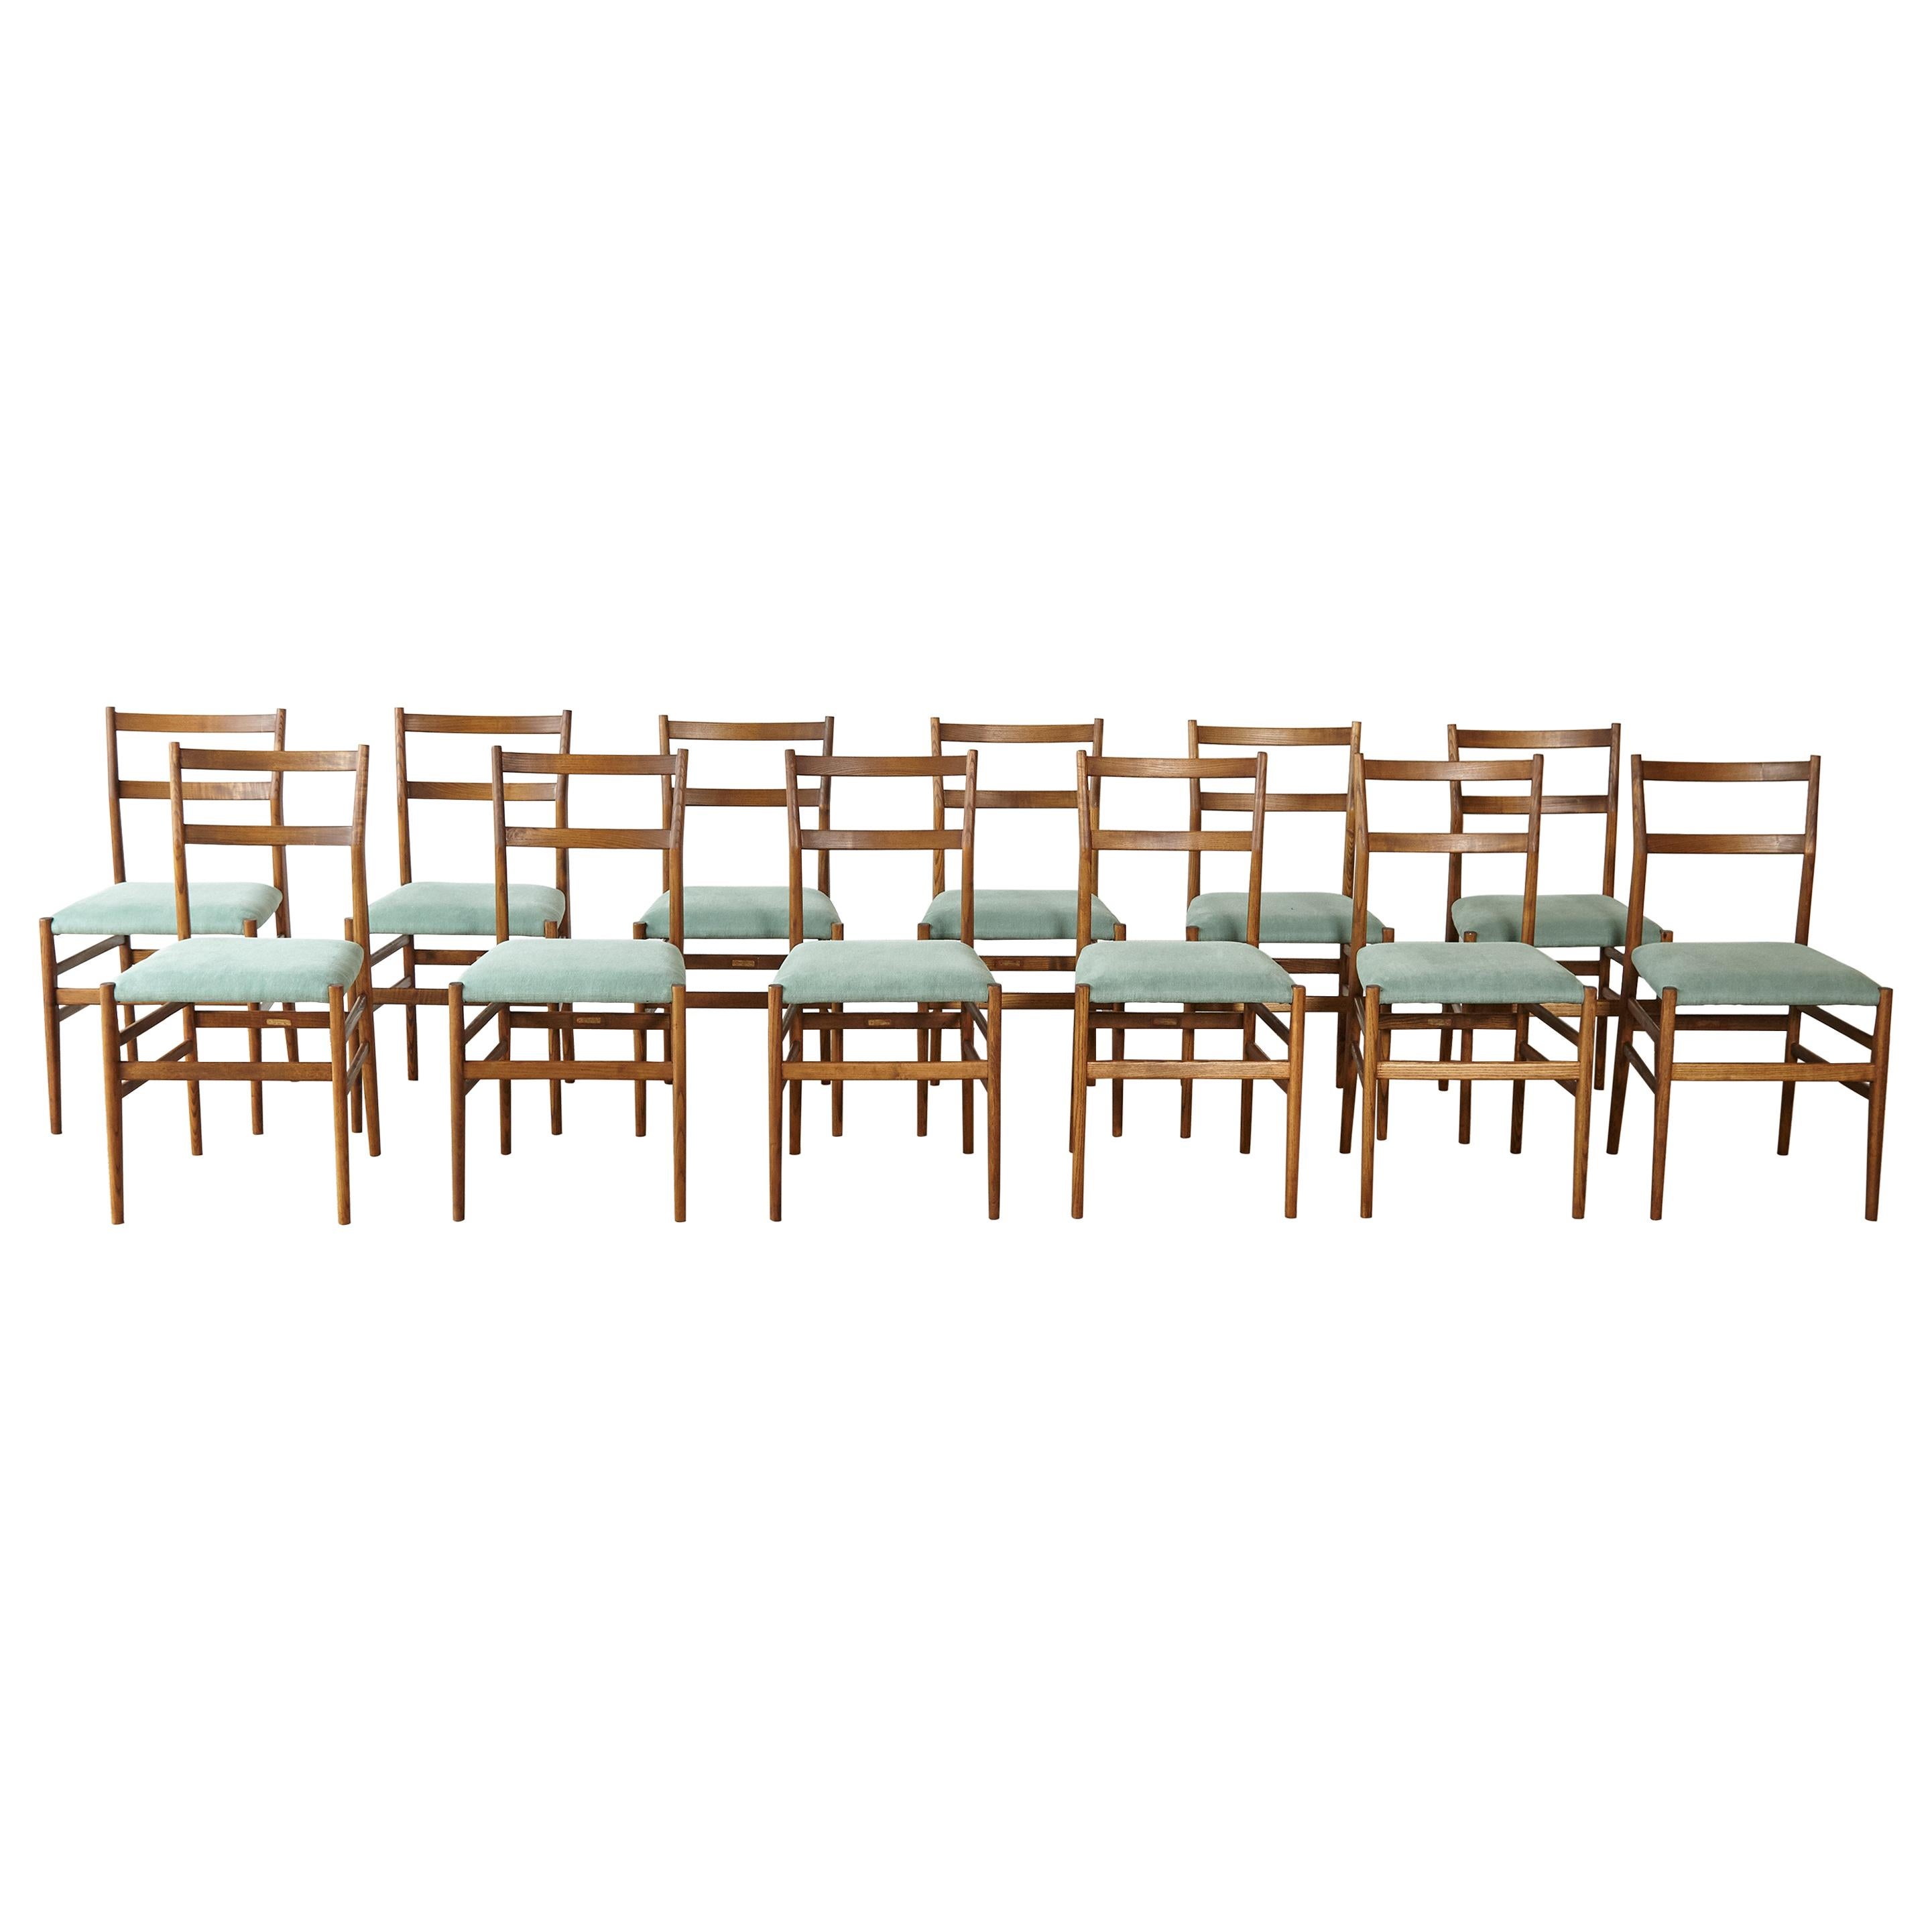 A Set of 12 Gio Ponti Leggera Model 646 Dining Chairs for Cassina, Italy, 1950s